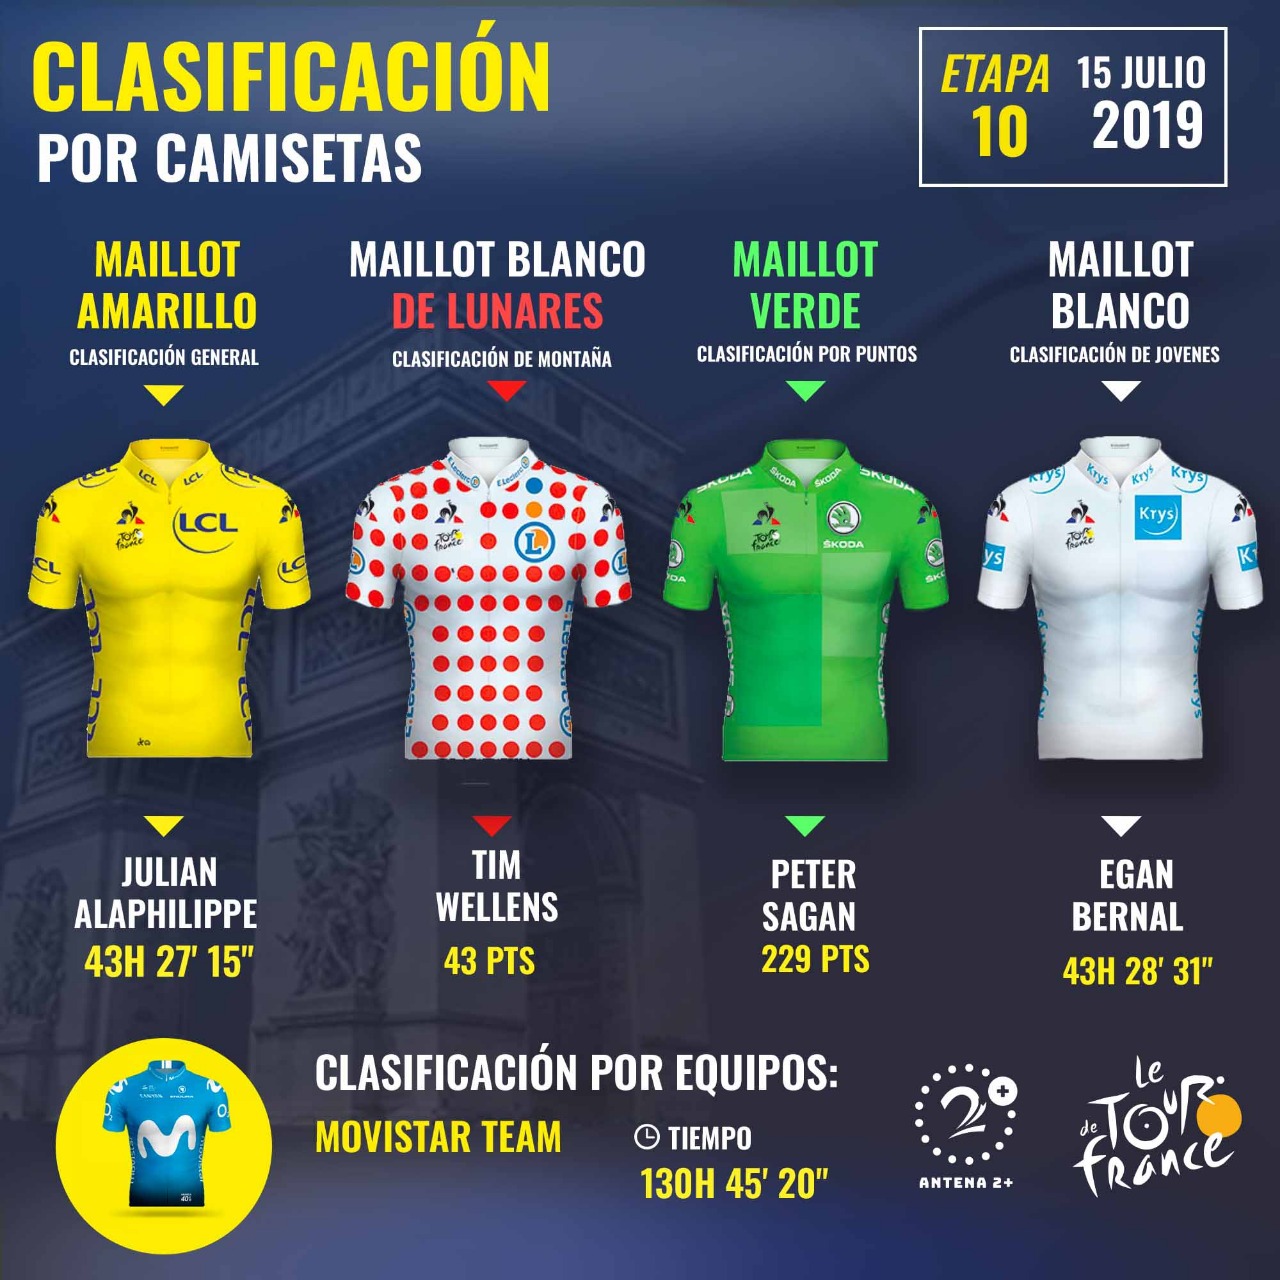 Tour de Francia 2019, clasificaciones, etapa 10